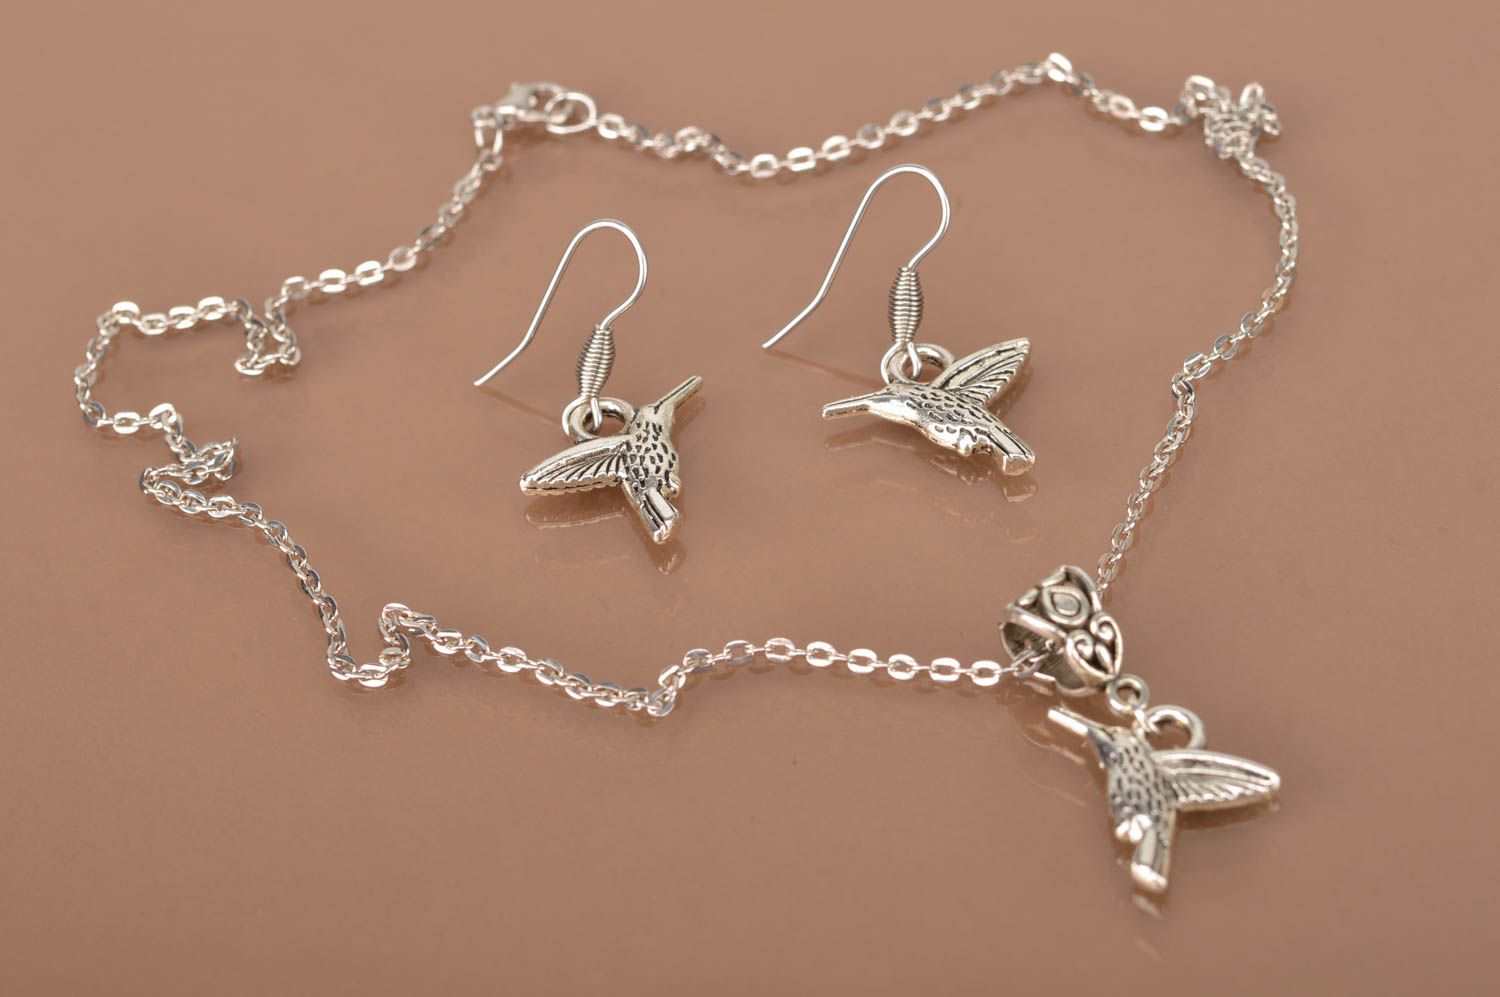 Handmade  jewelry metal jewelry set pendant necklace dangling earrings photo 2